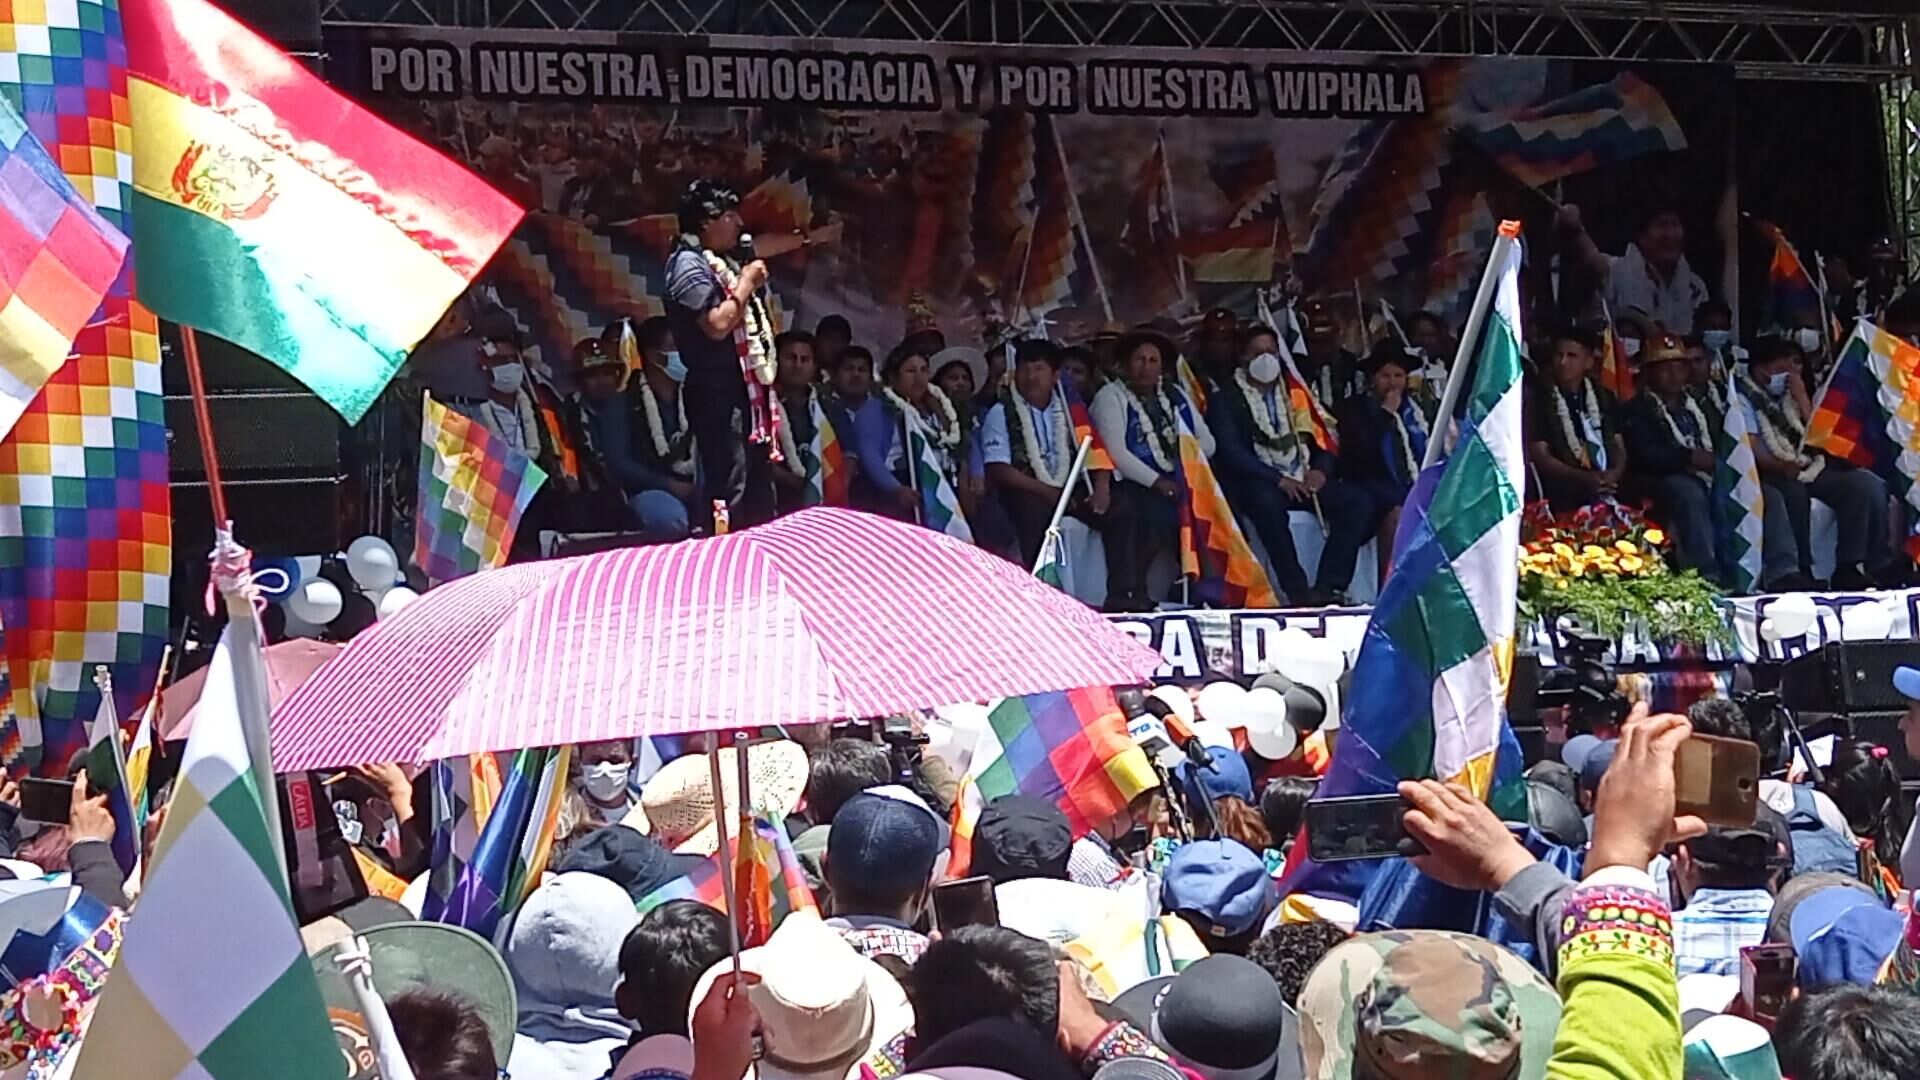 Marcha en defensa de la wiphala en Bolivia - Sputnik Mundo, 1920, 31.12.2021